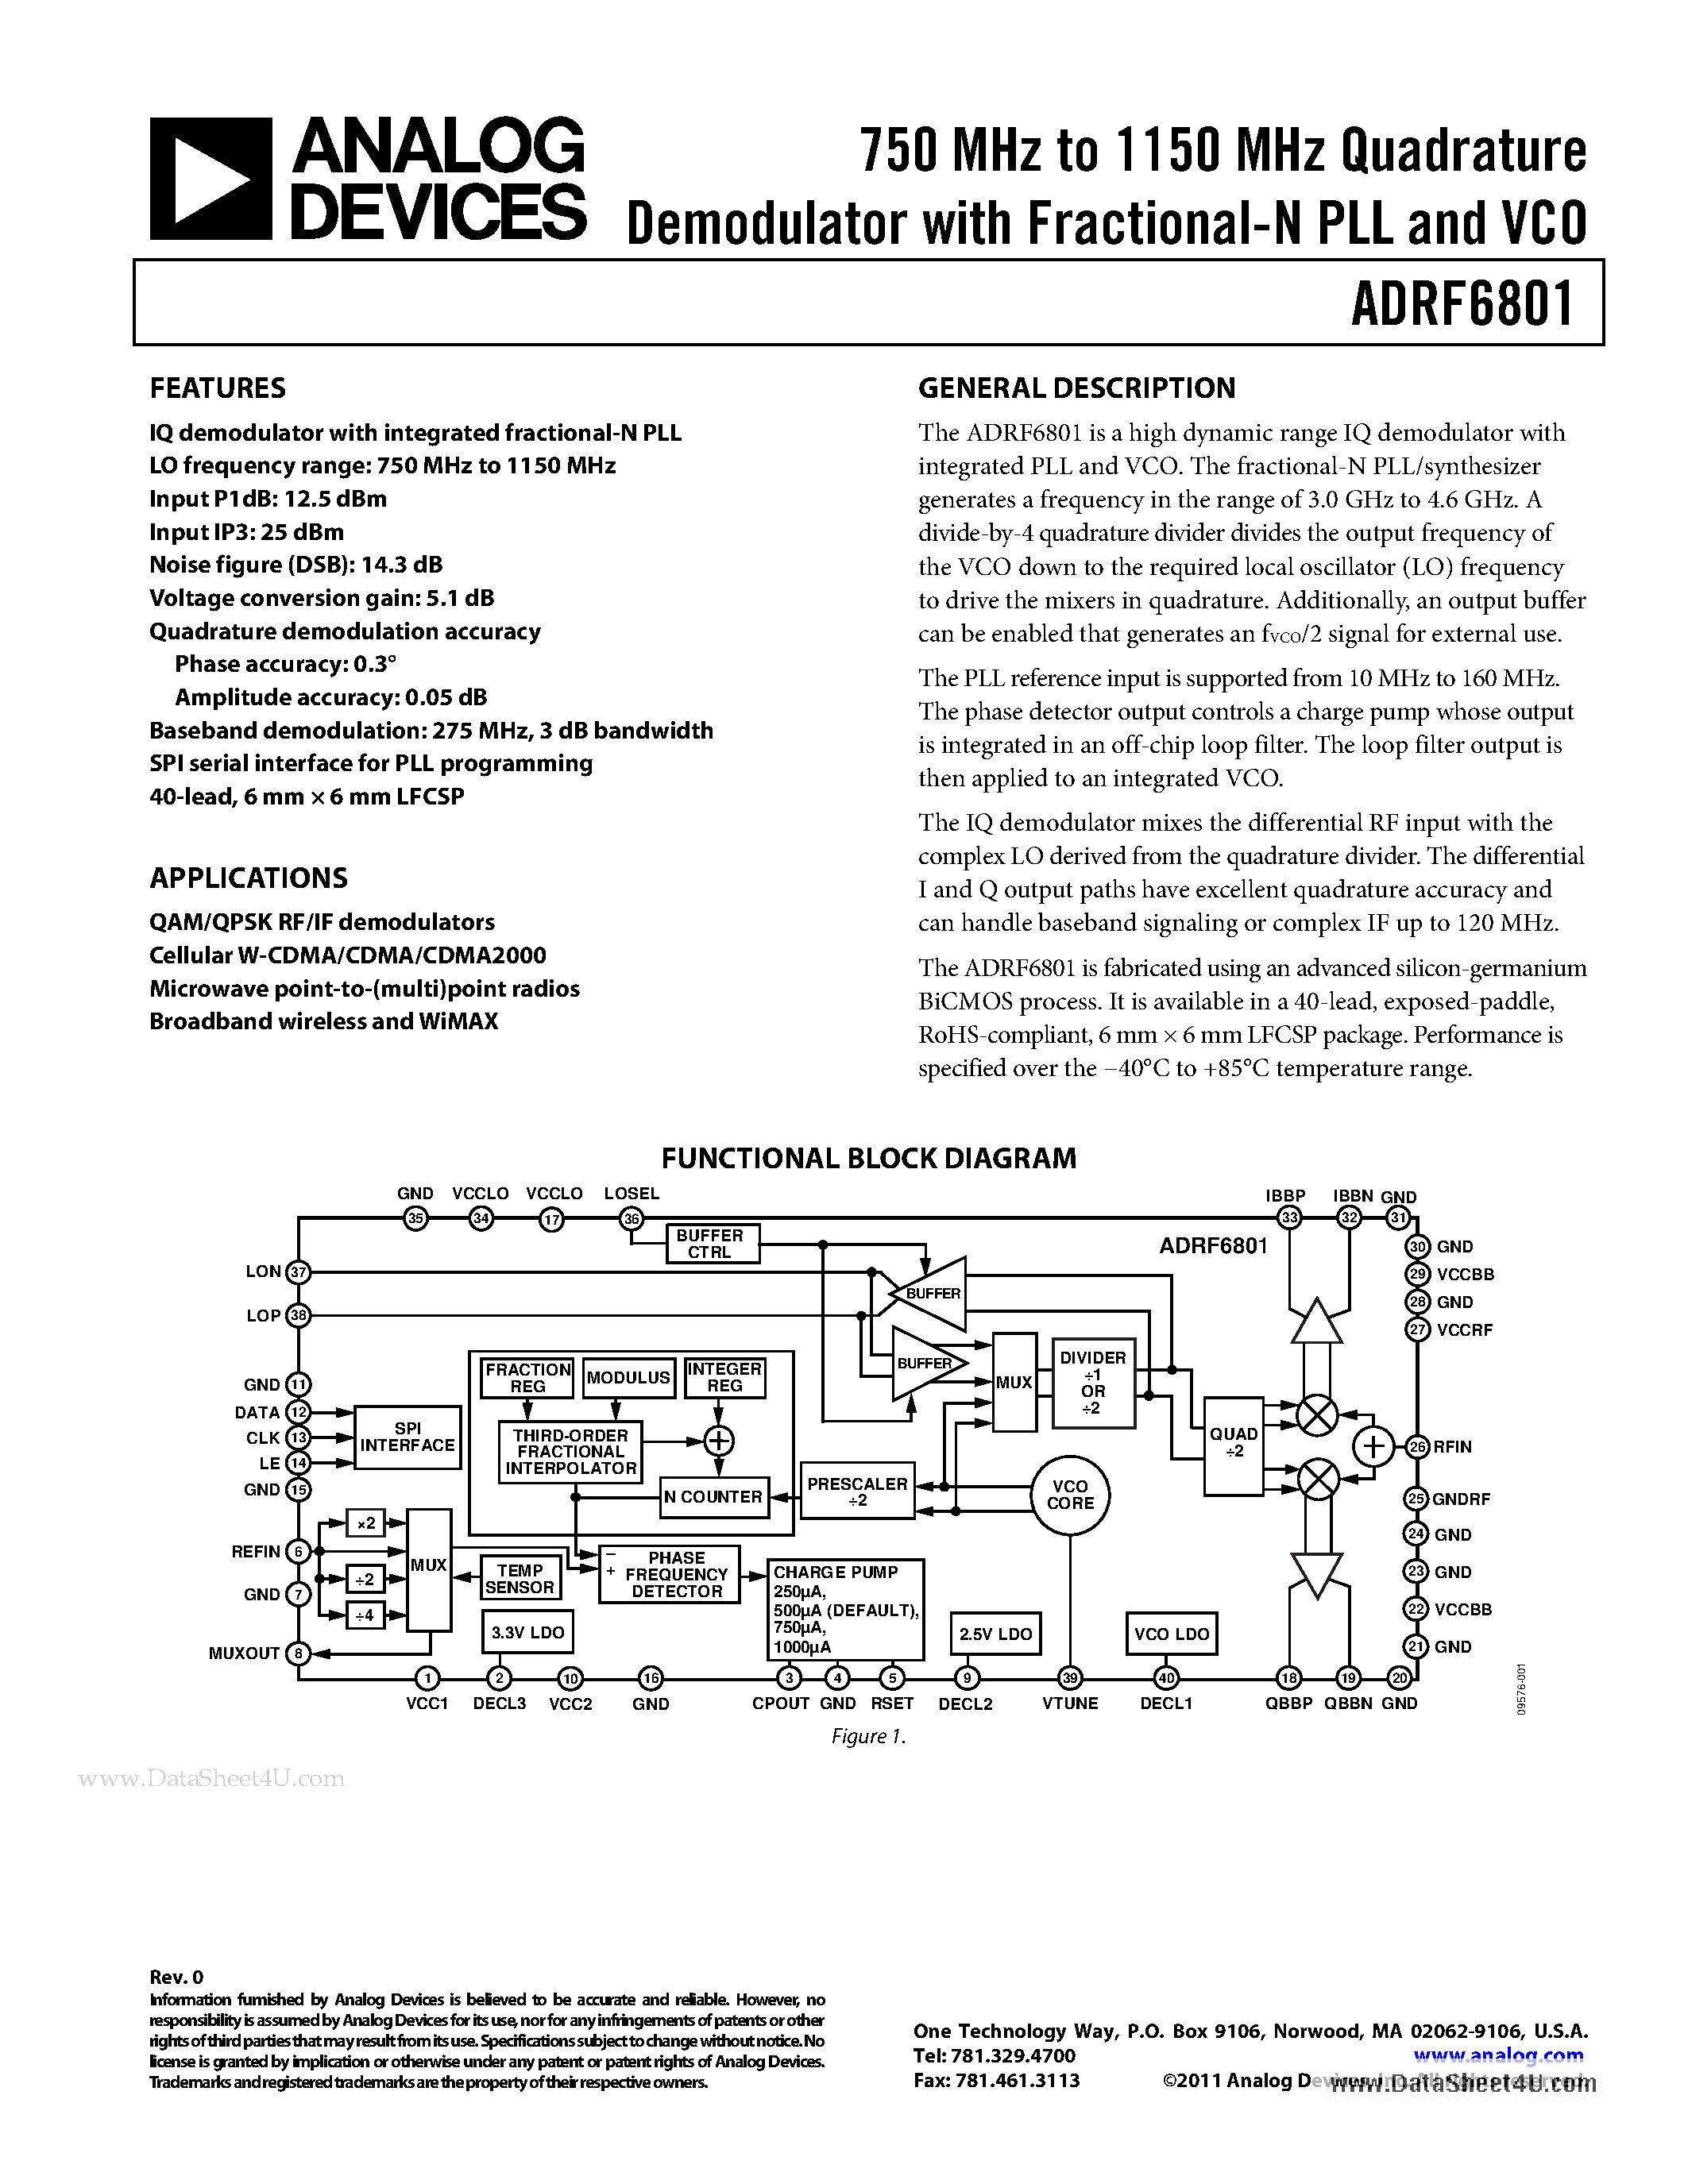 Datasheet ADRF6801 - 750 MHz to 1150 MHz Quadrature Demodulator page 1